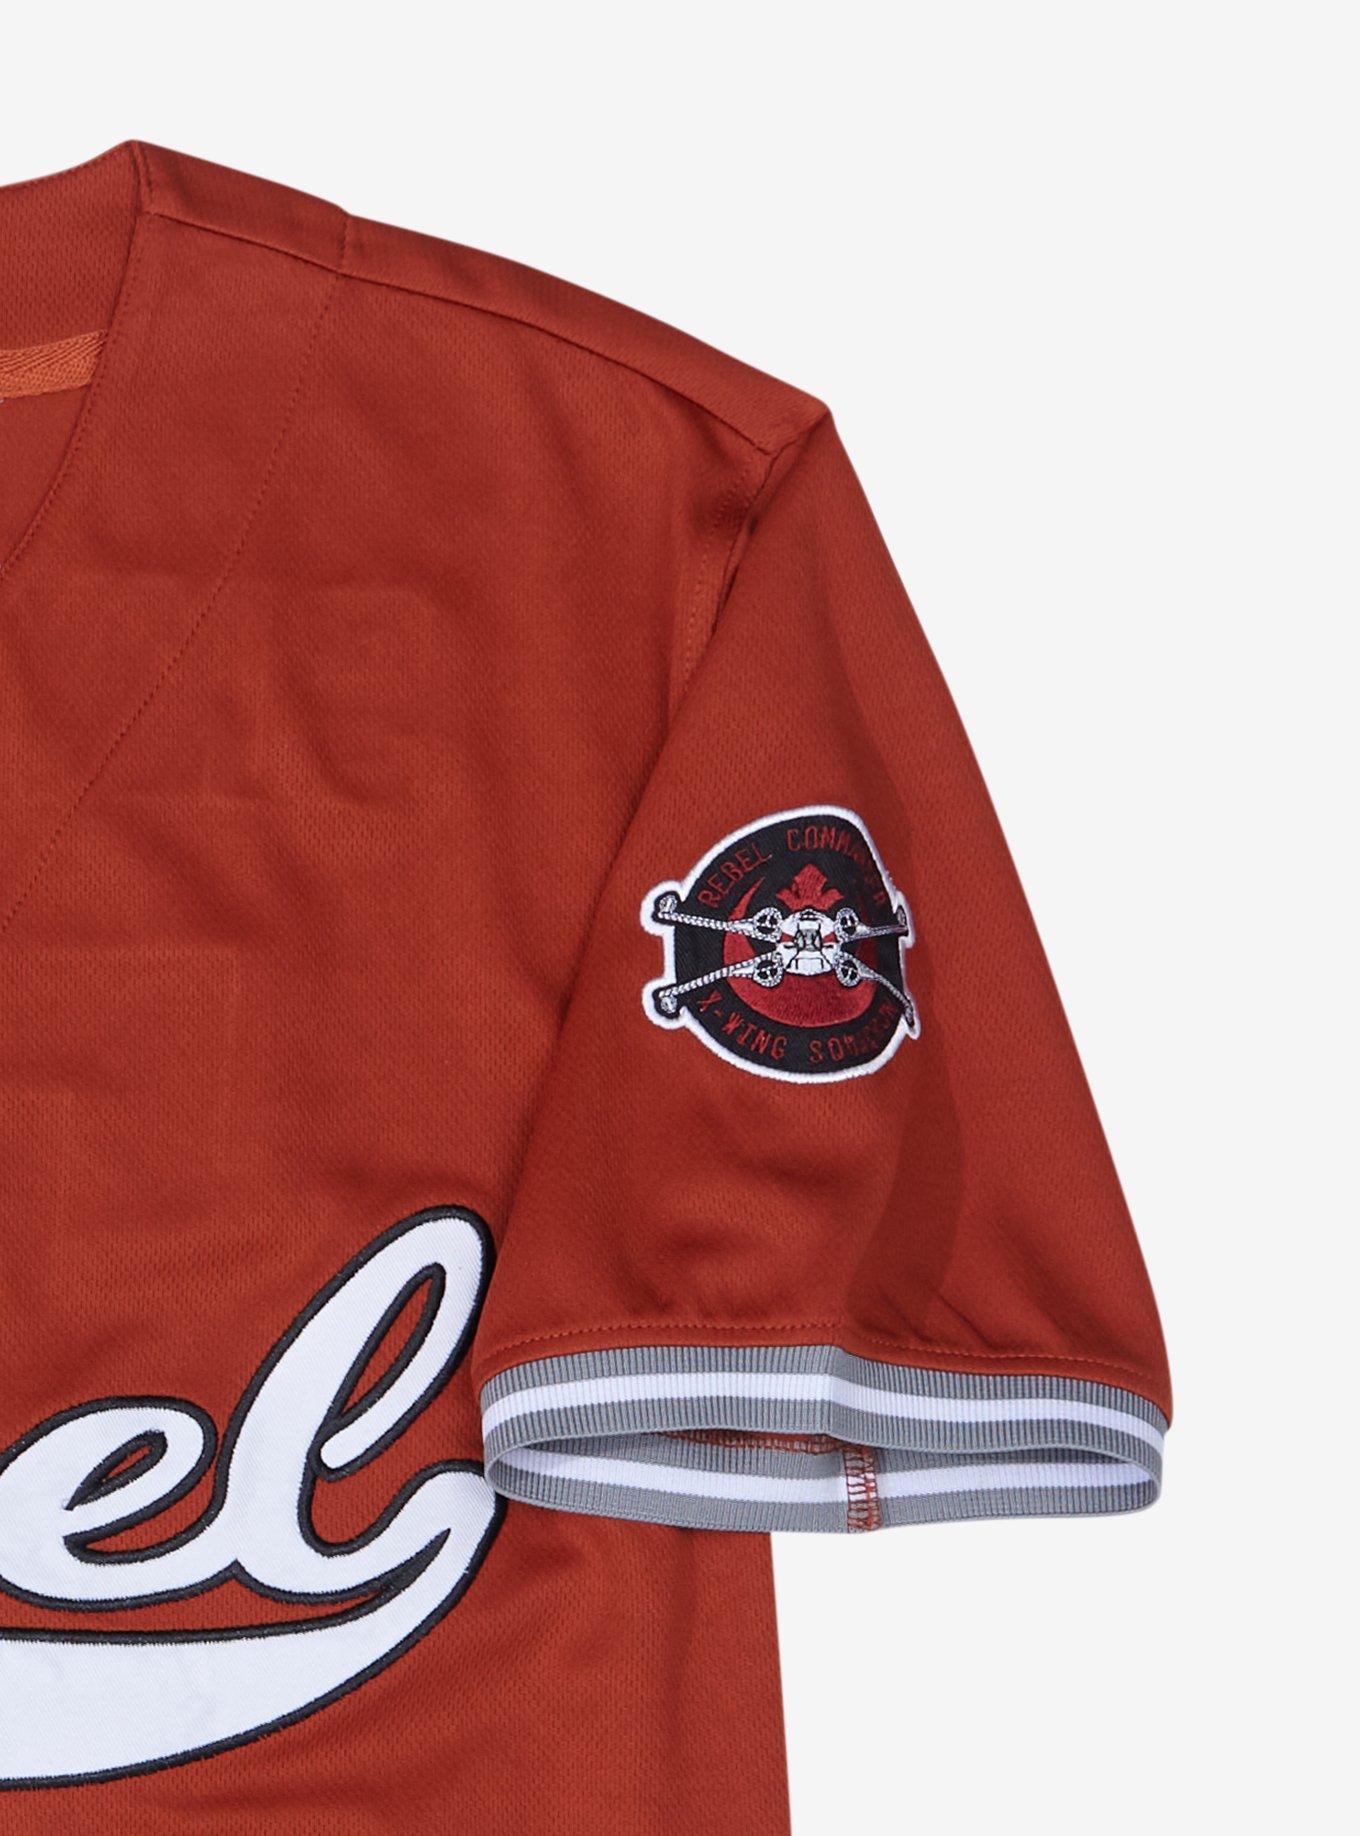 Rebels Logo Baseball Jersey for Adults – Star Wars – Pre-Order-Size-M 